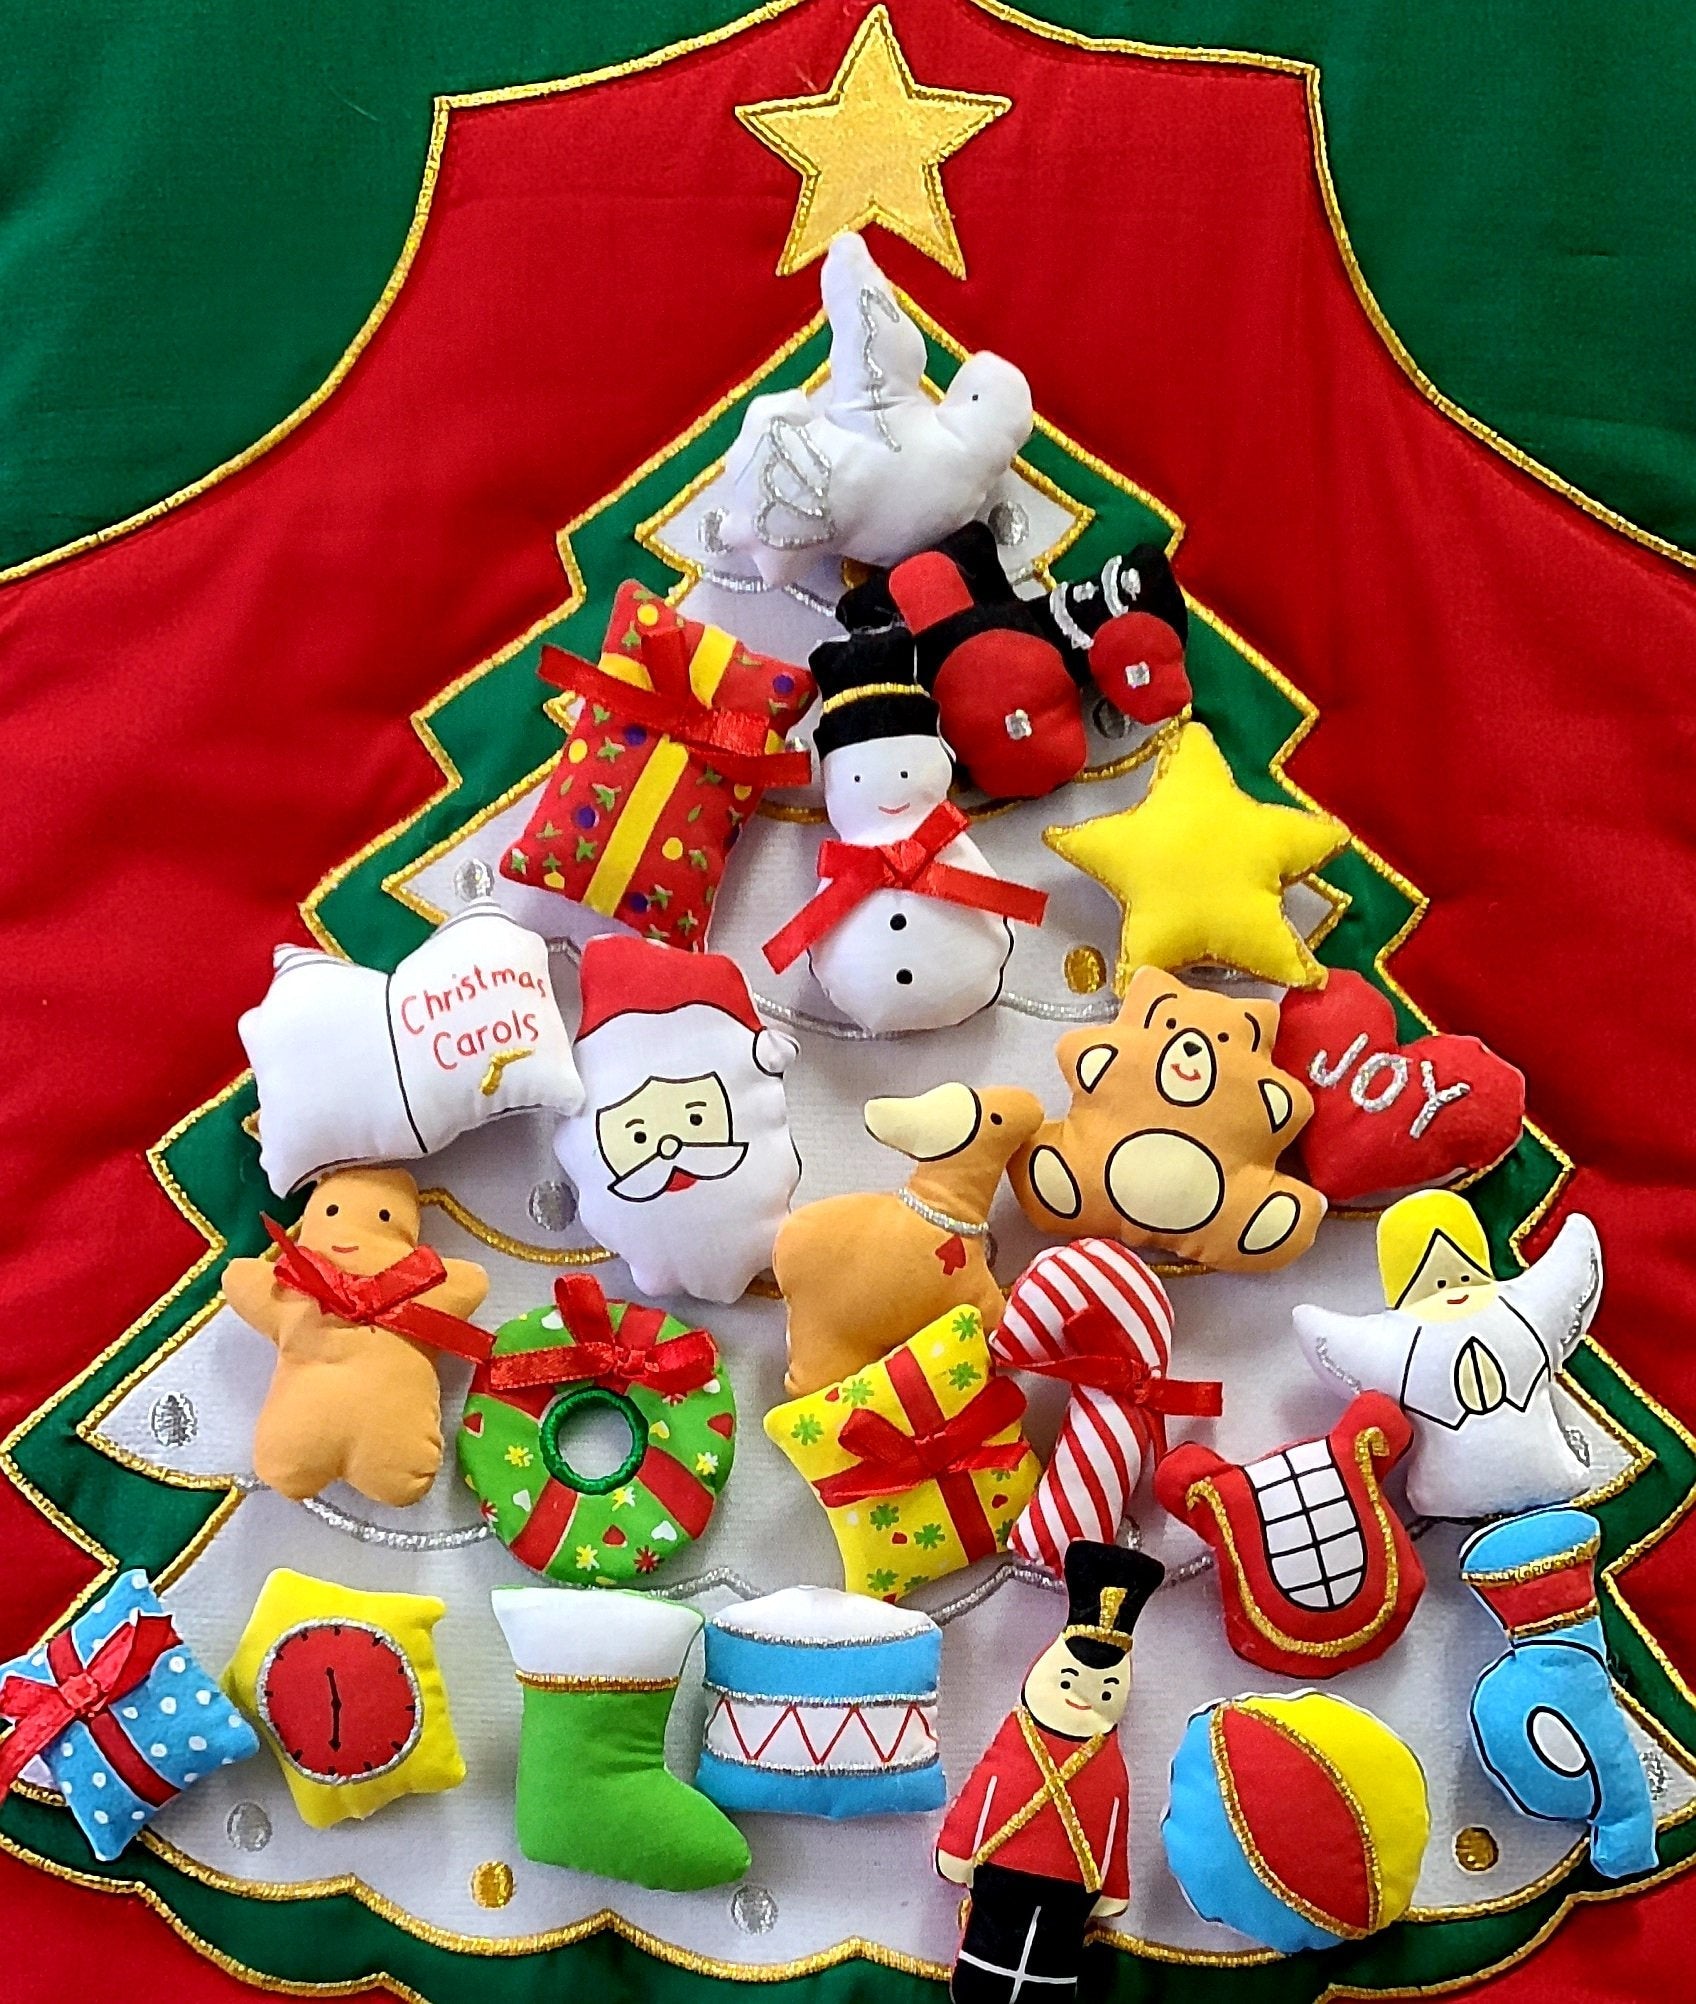 White Christmas Tree Advent Calendar WITH "Merry Christmas"